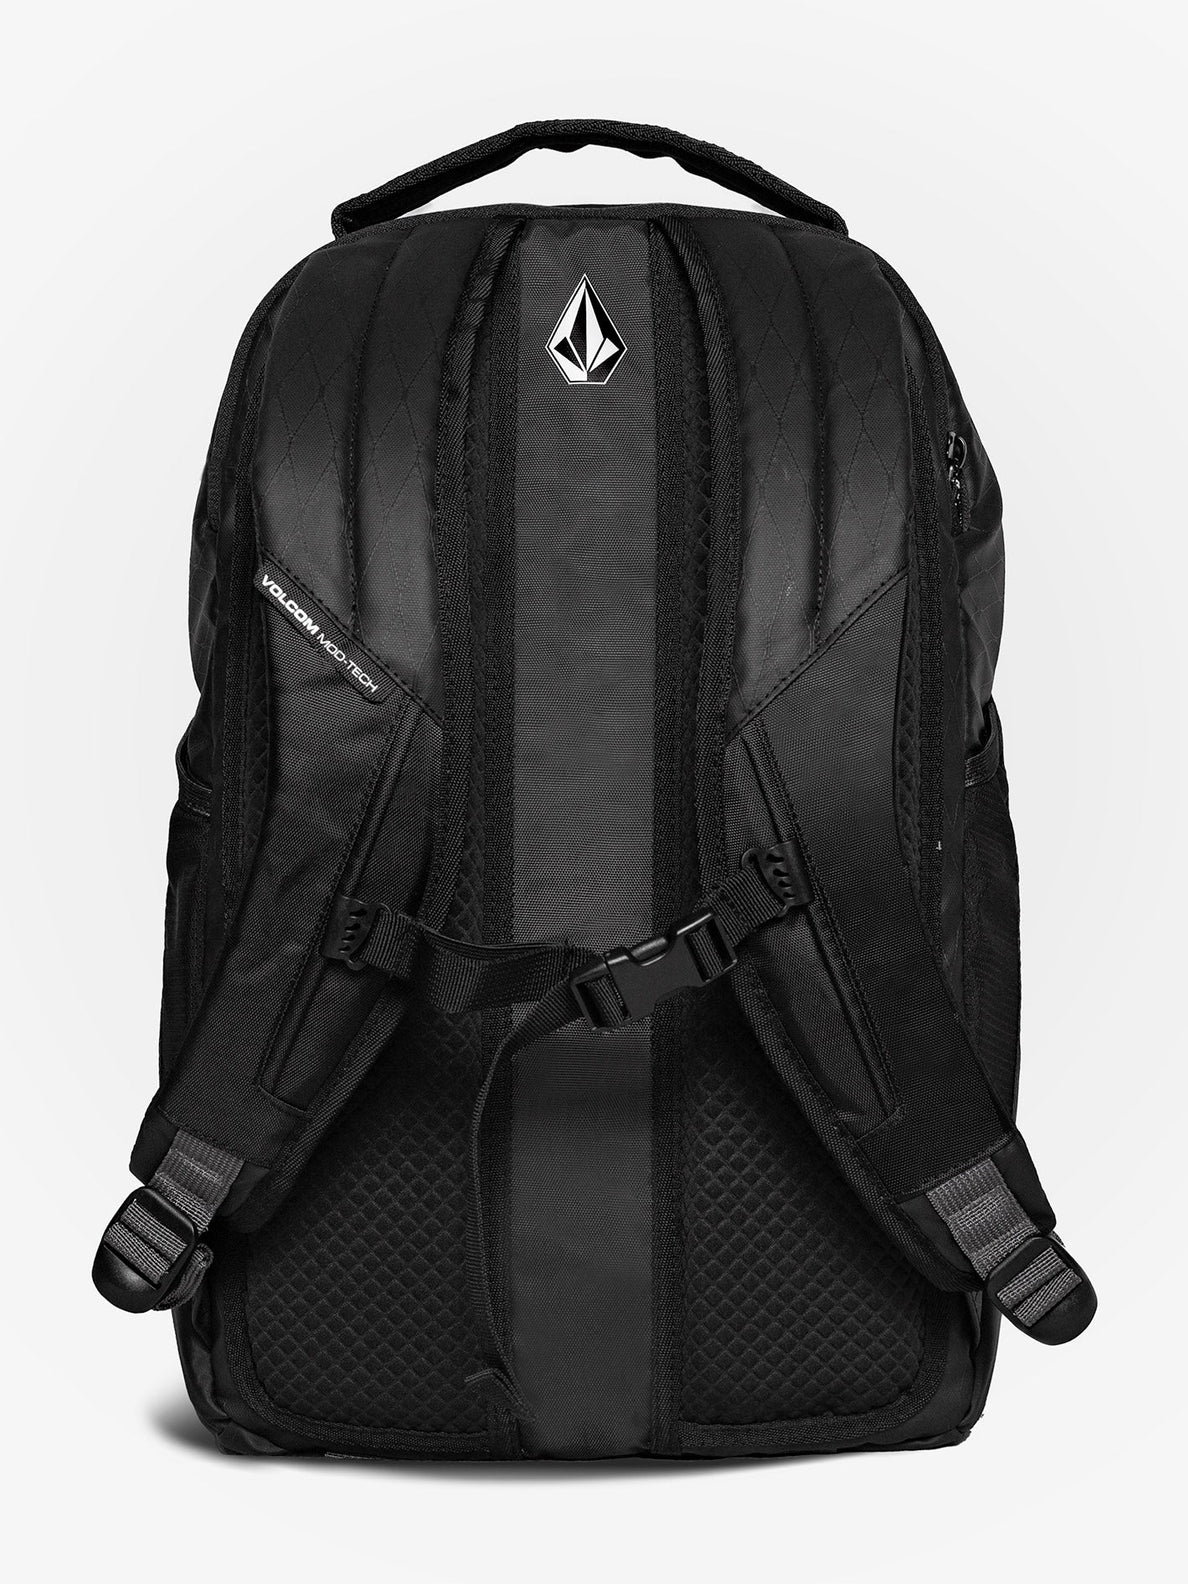 Venture Backpack - Black